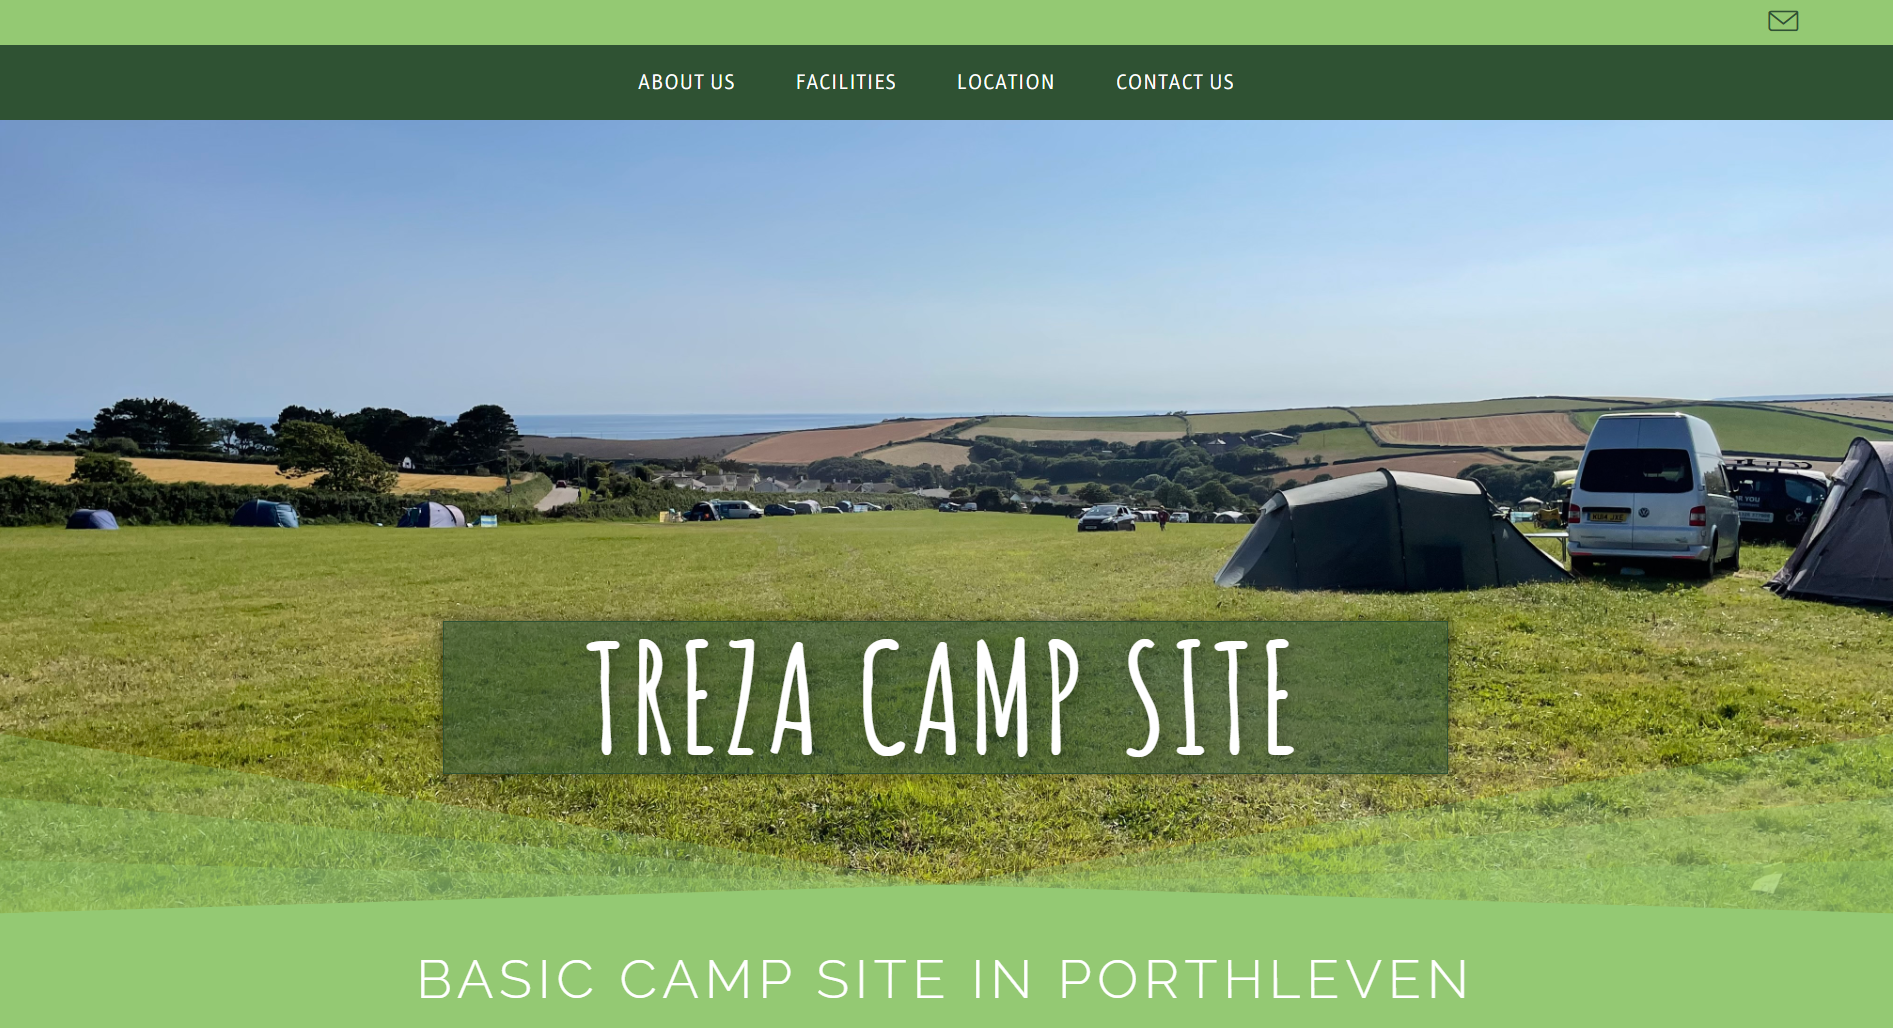 Treza camp site